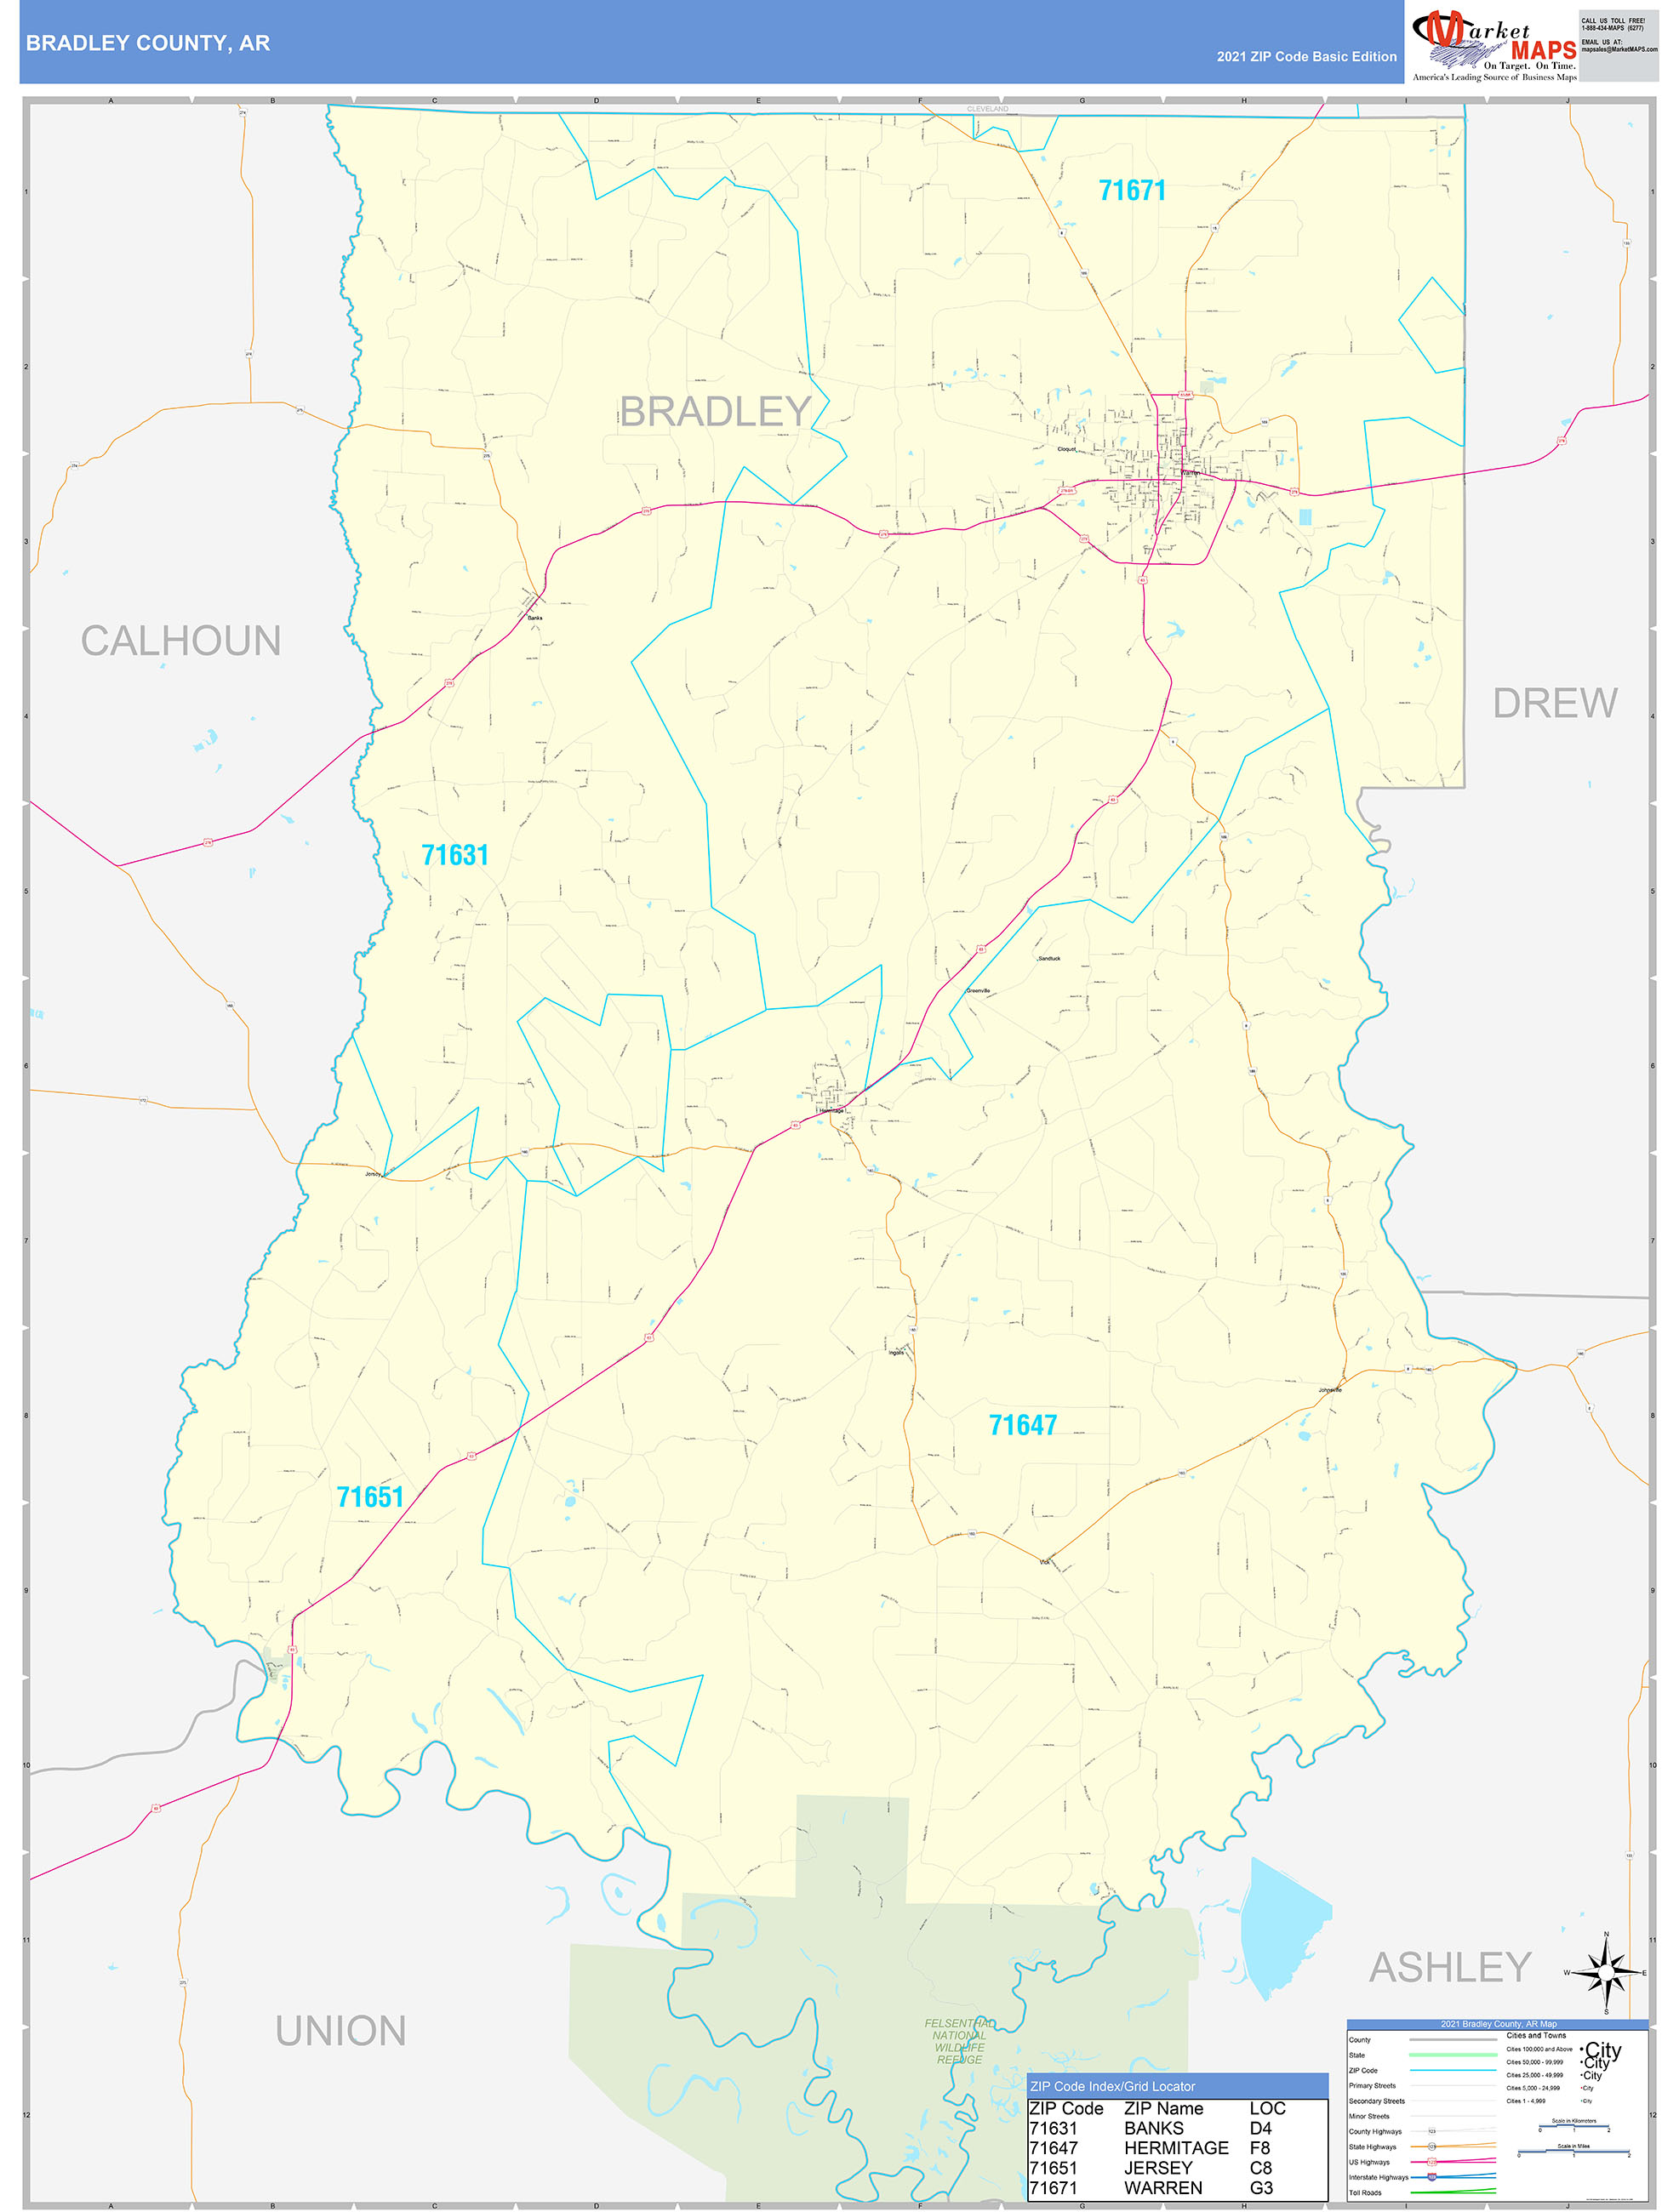 Bradley County, AR Zip Code Wall Map Basic Style by MarketMAPS - MapSales